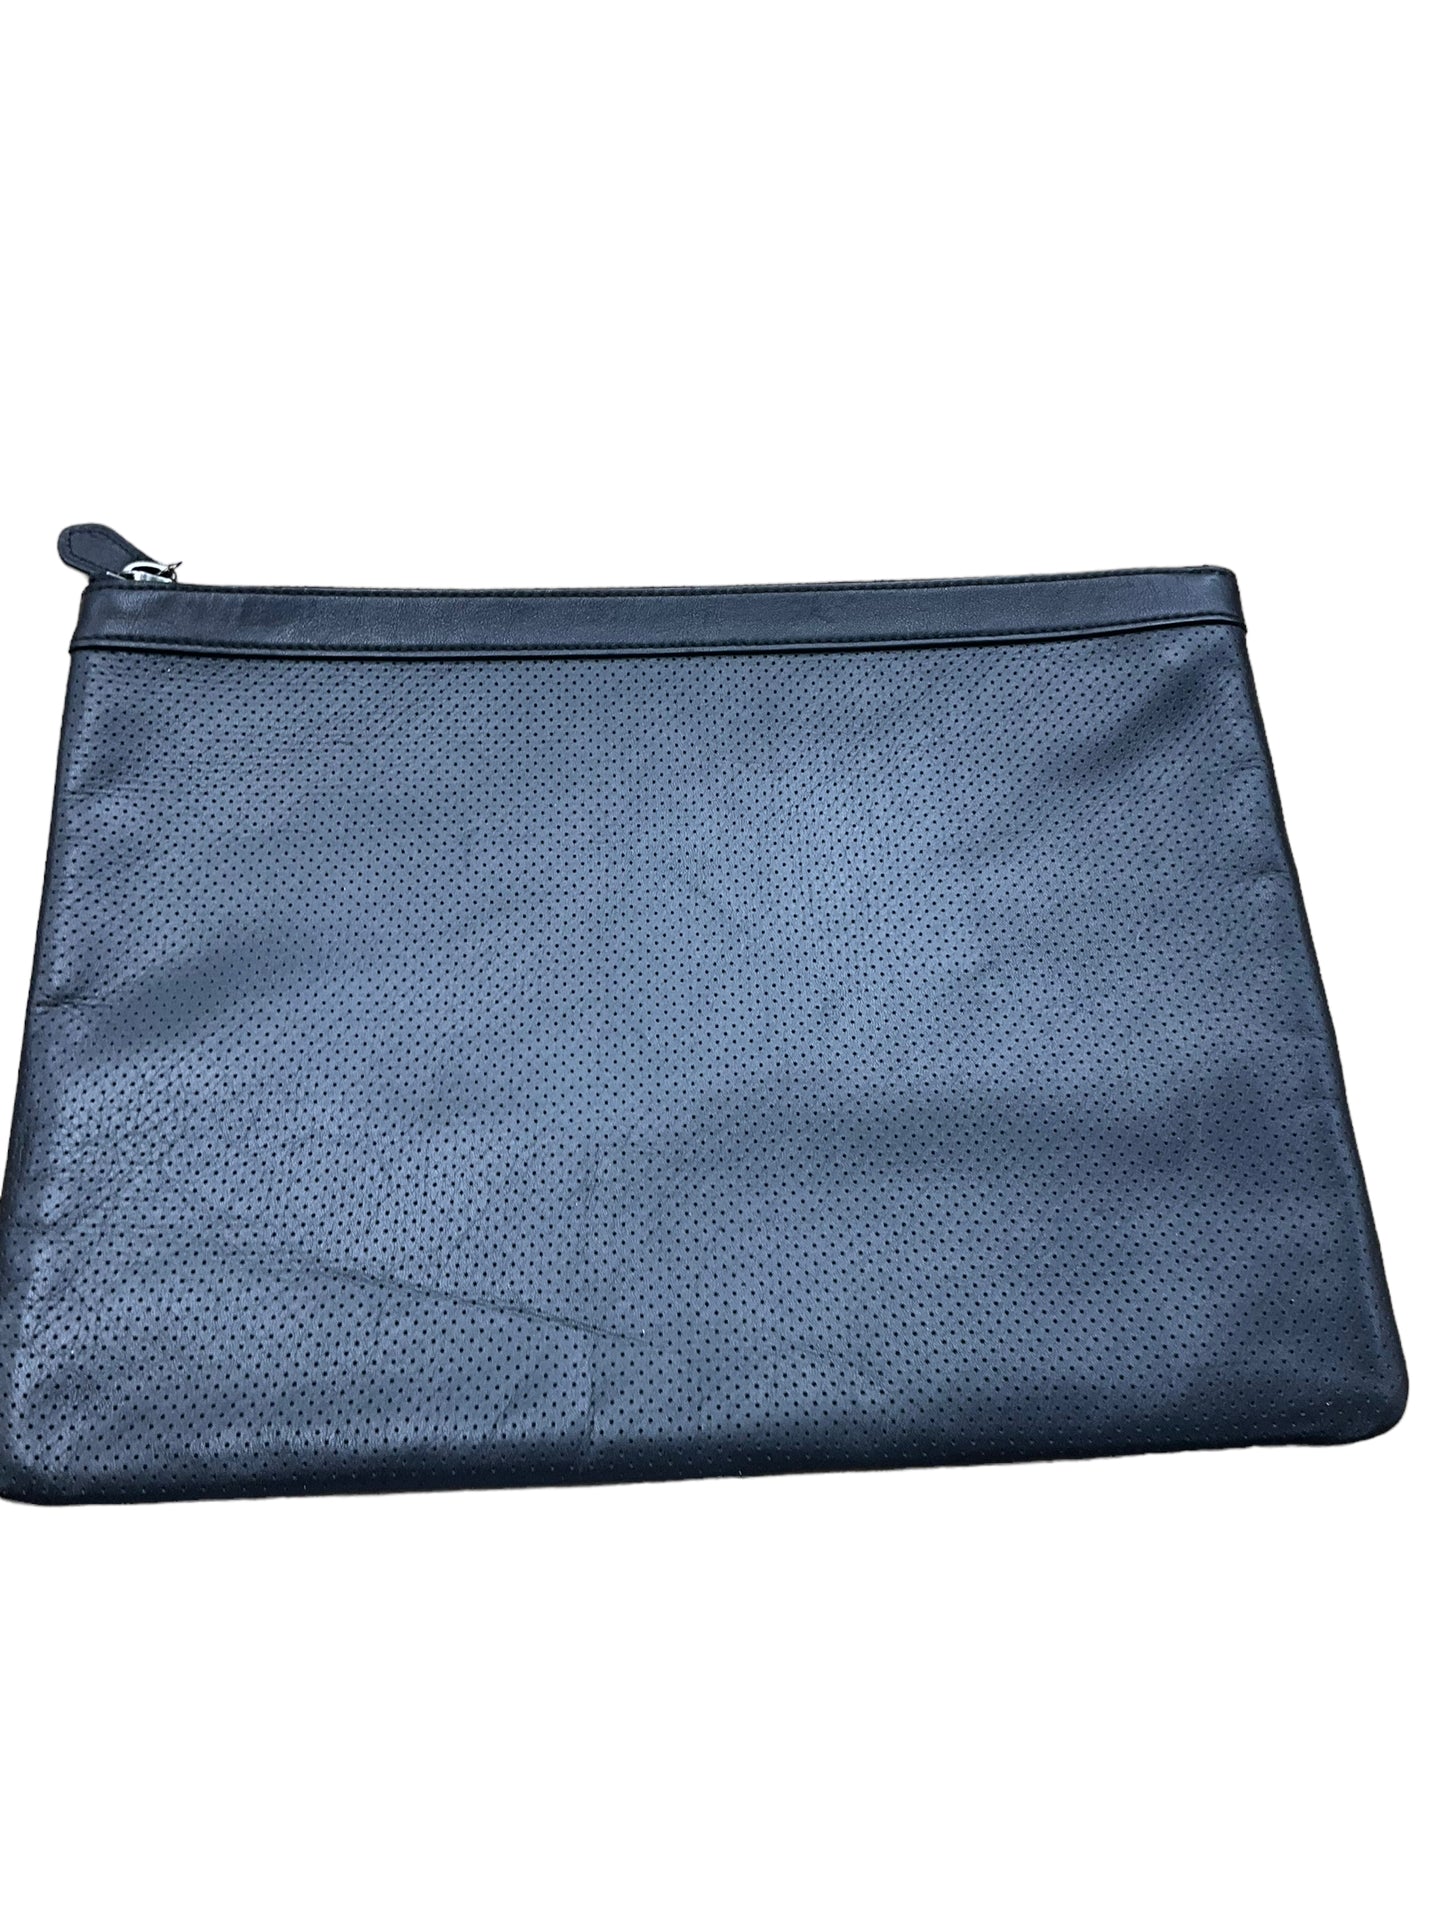 Laptop Bag Designer By Coach  Size: Medium